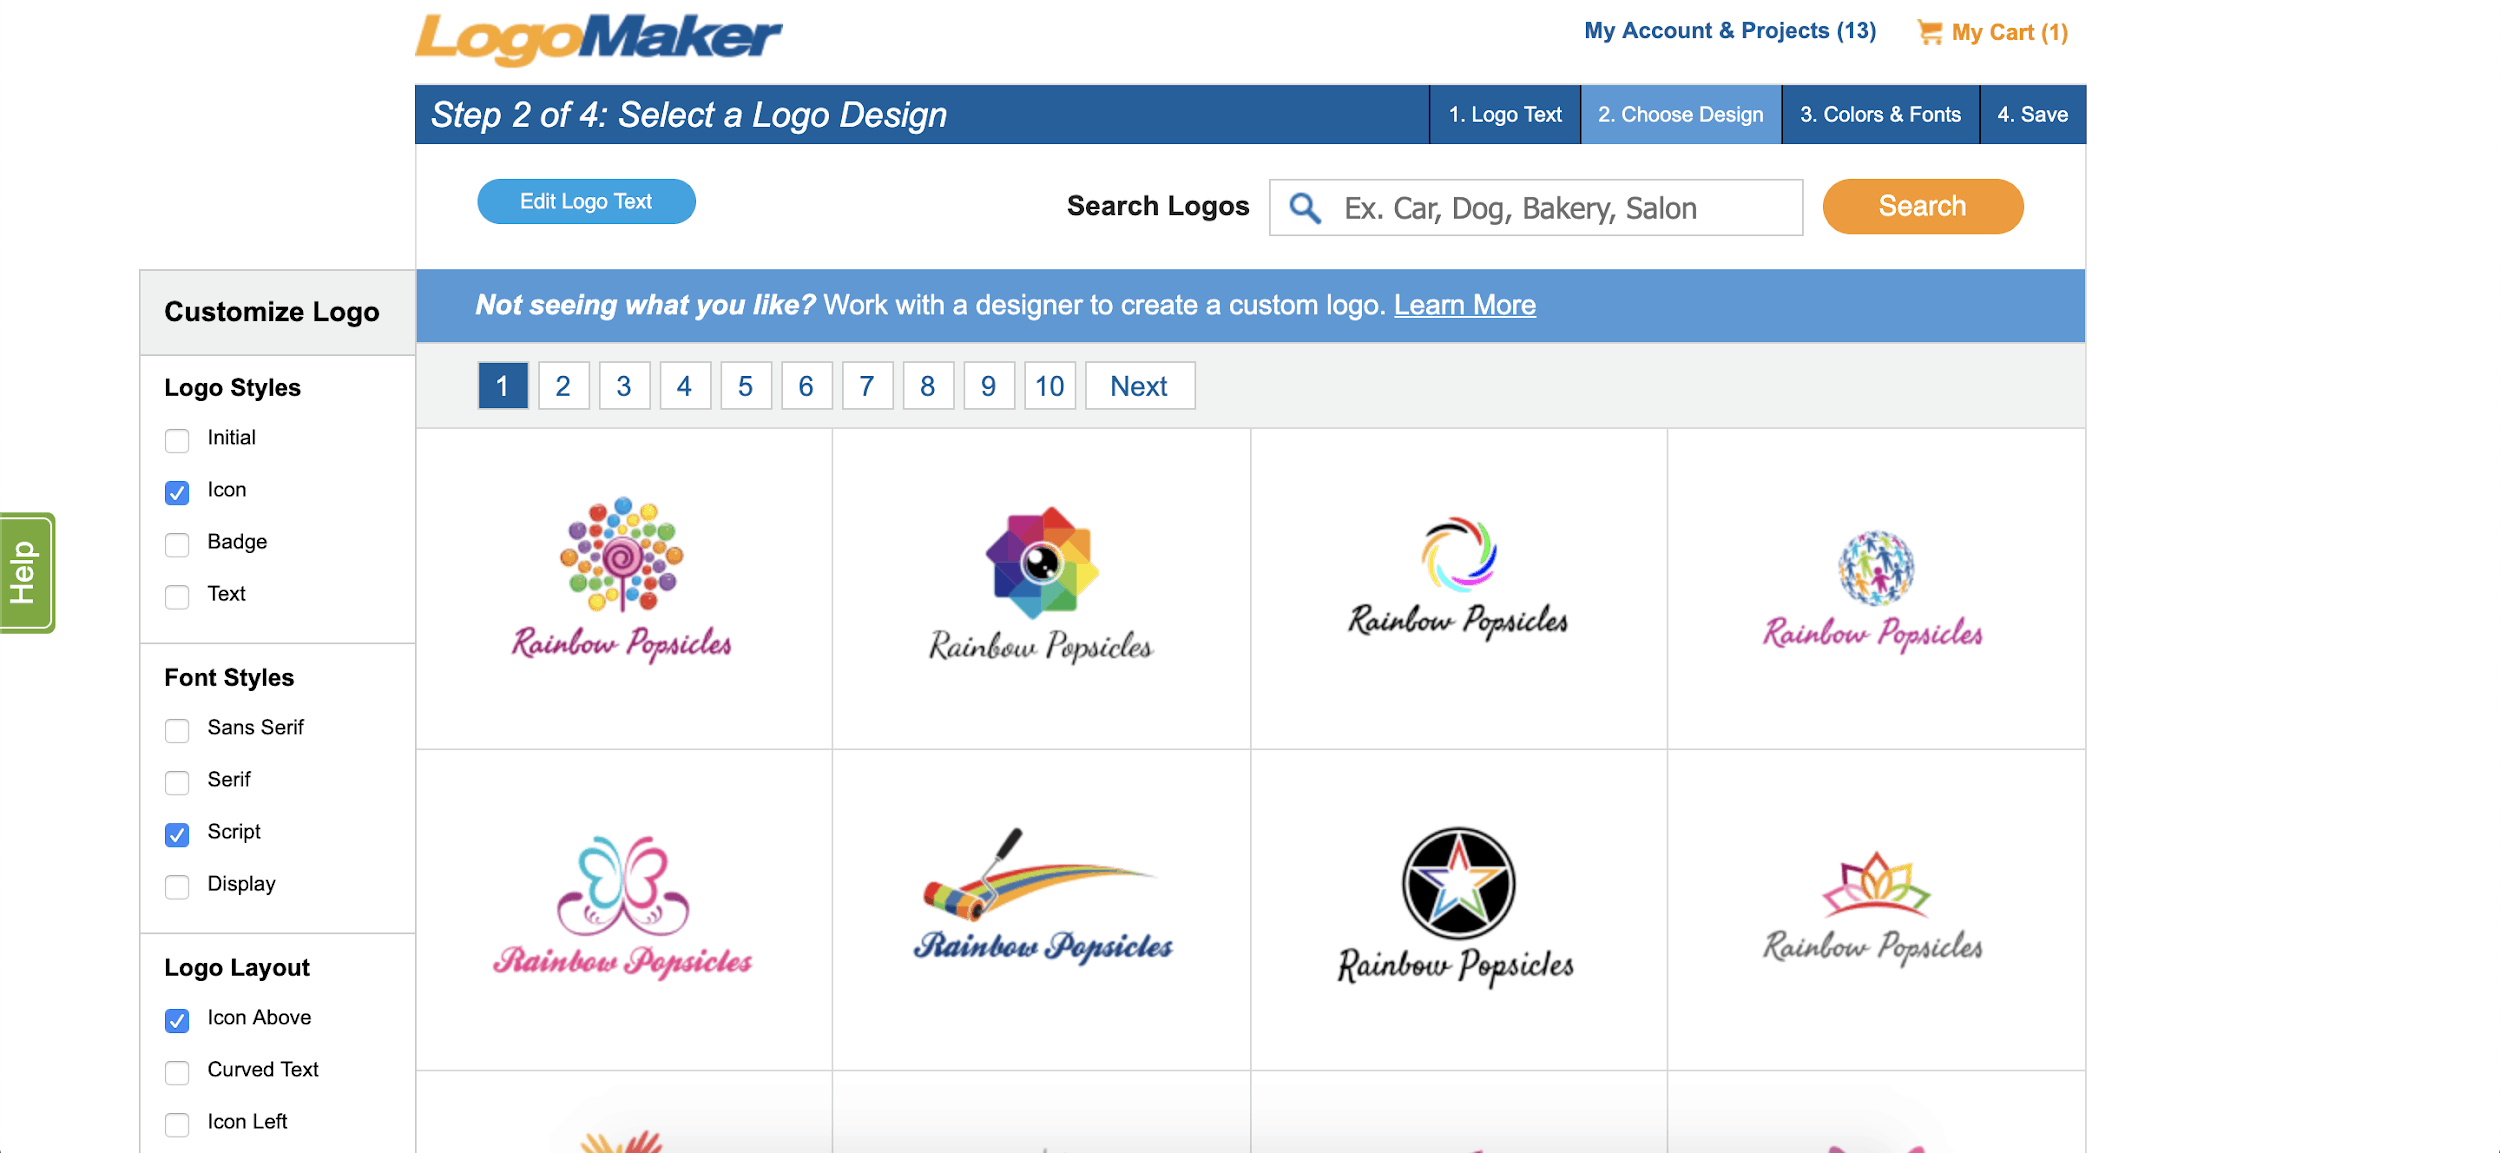 LogoMaker screenshot - Select a logo design